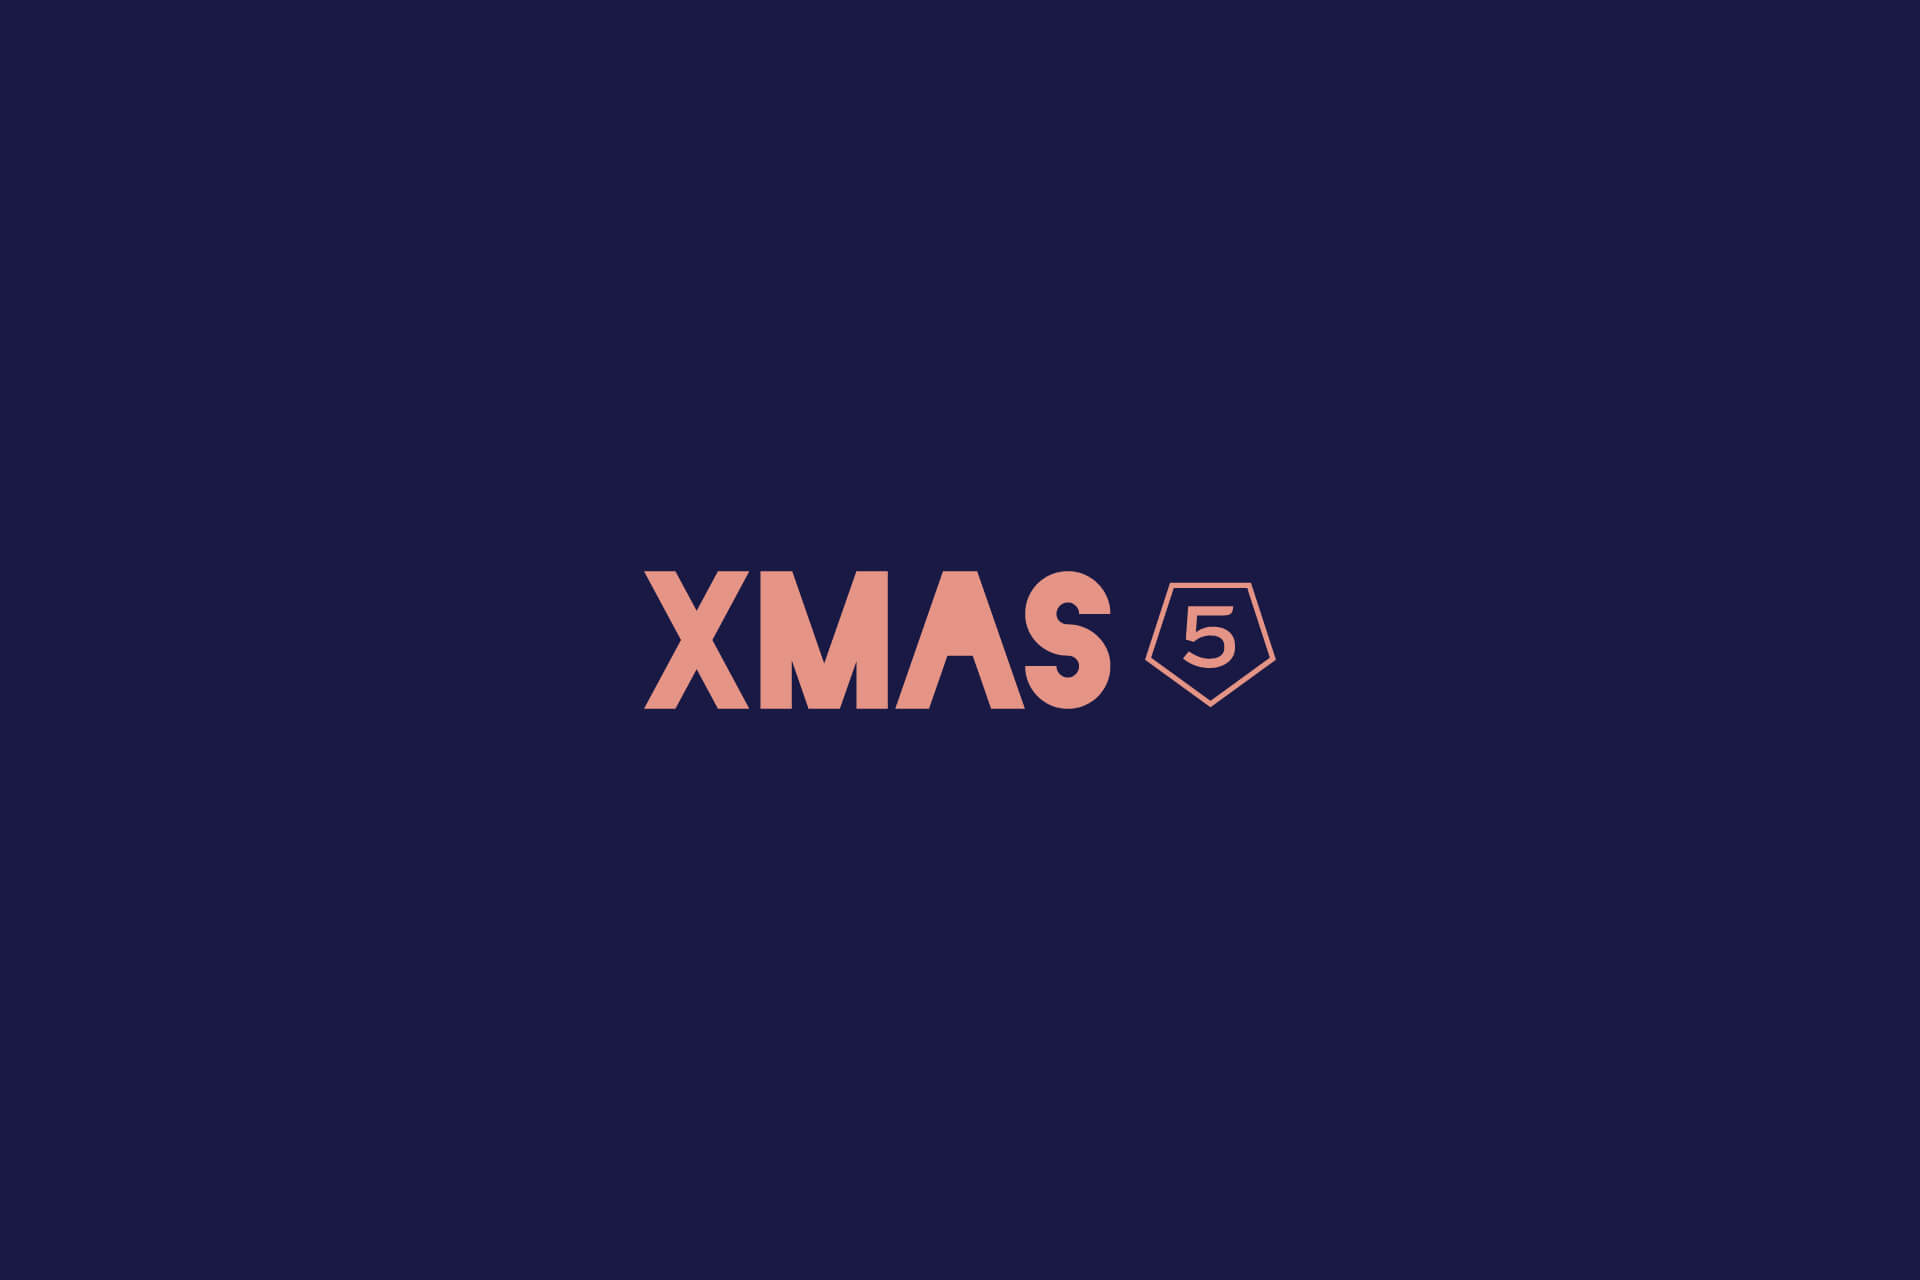 Xmas Five logotype